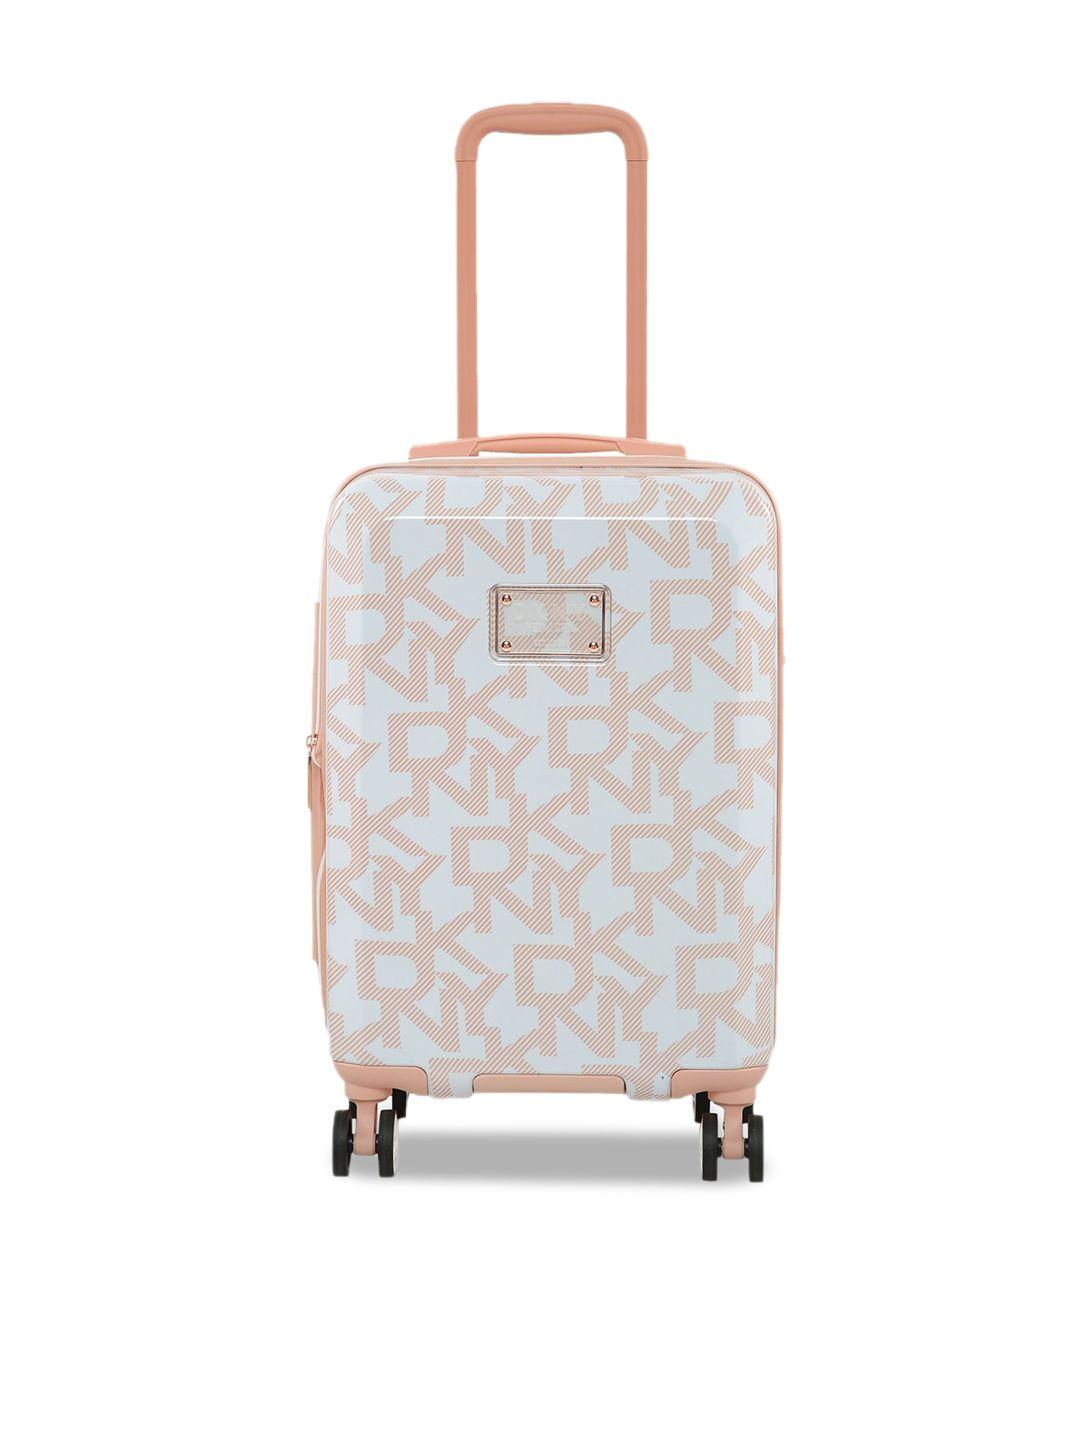 dkny signature hardside white & venus rose color hard case abs pc film cabin size luggage